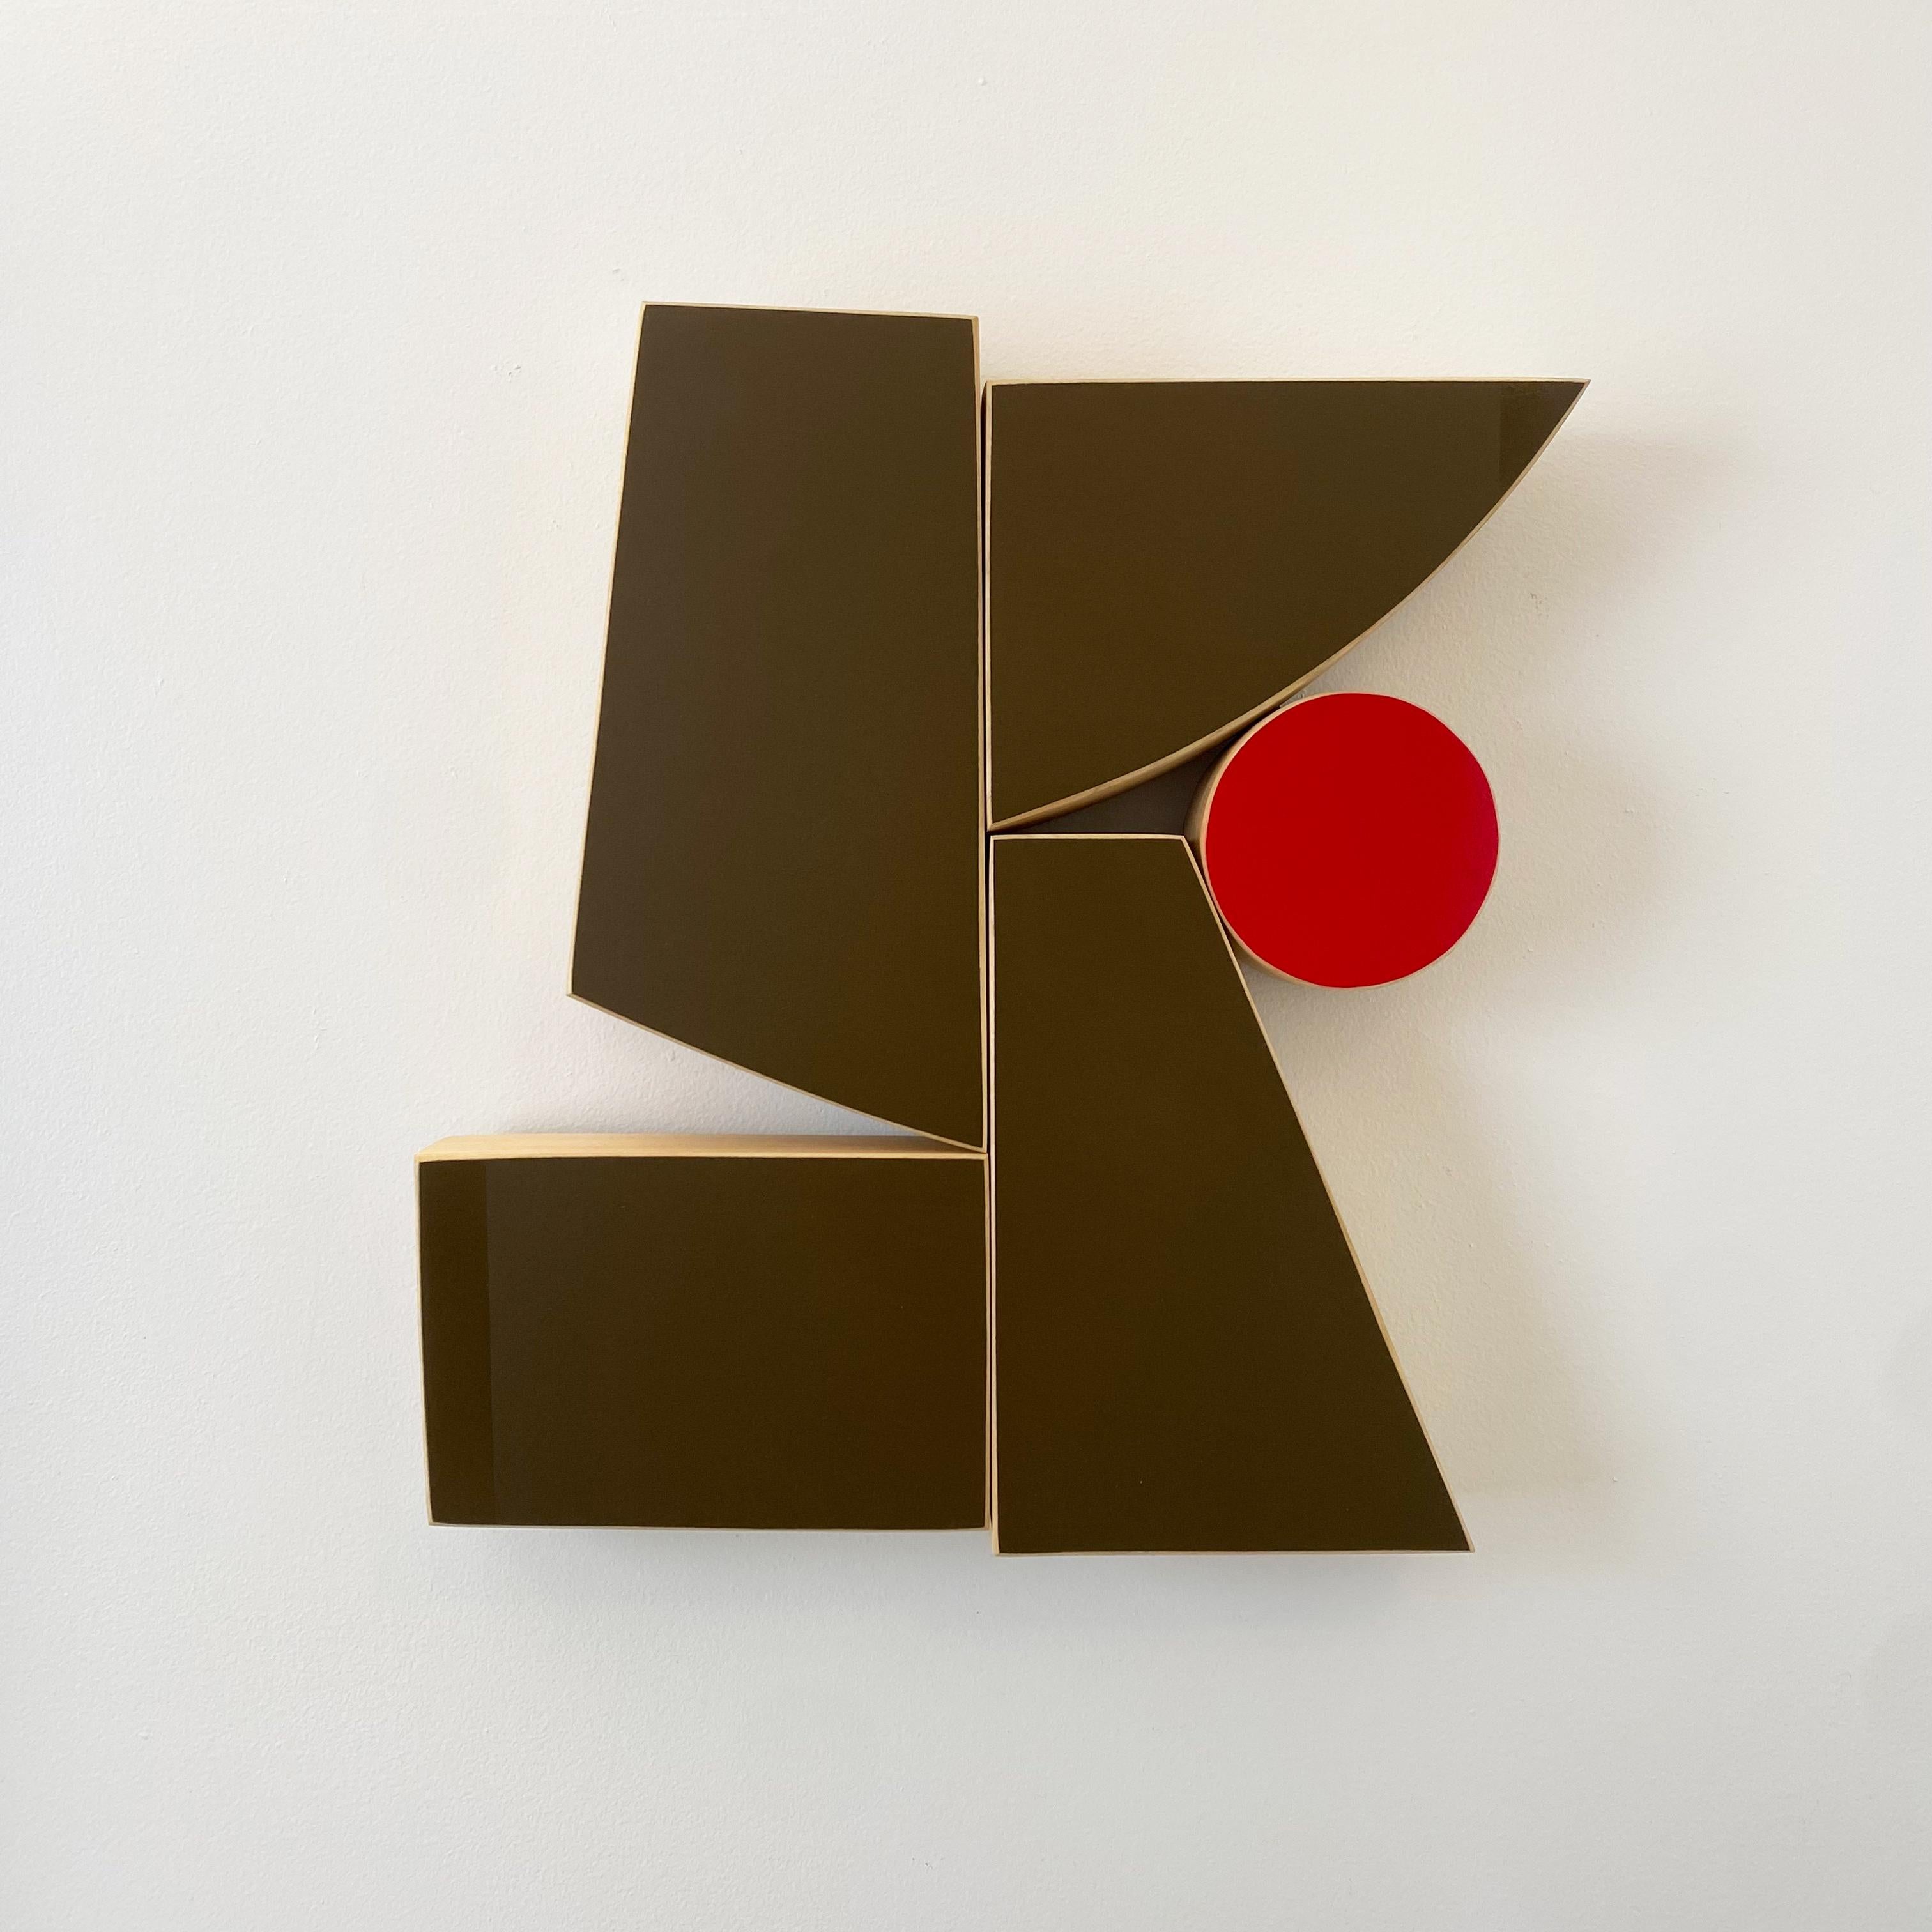 Scott Troxel Abstract Sculpture – "SKA" Wandskulptur-Holz, Minimalismus, Mitte des Jahrhunderts modern, braun, hellbraun, mcm